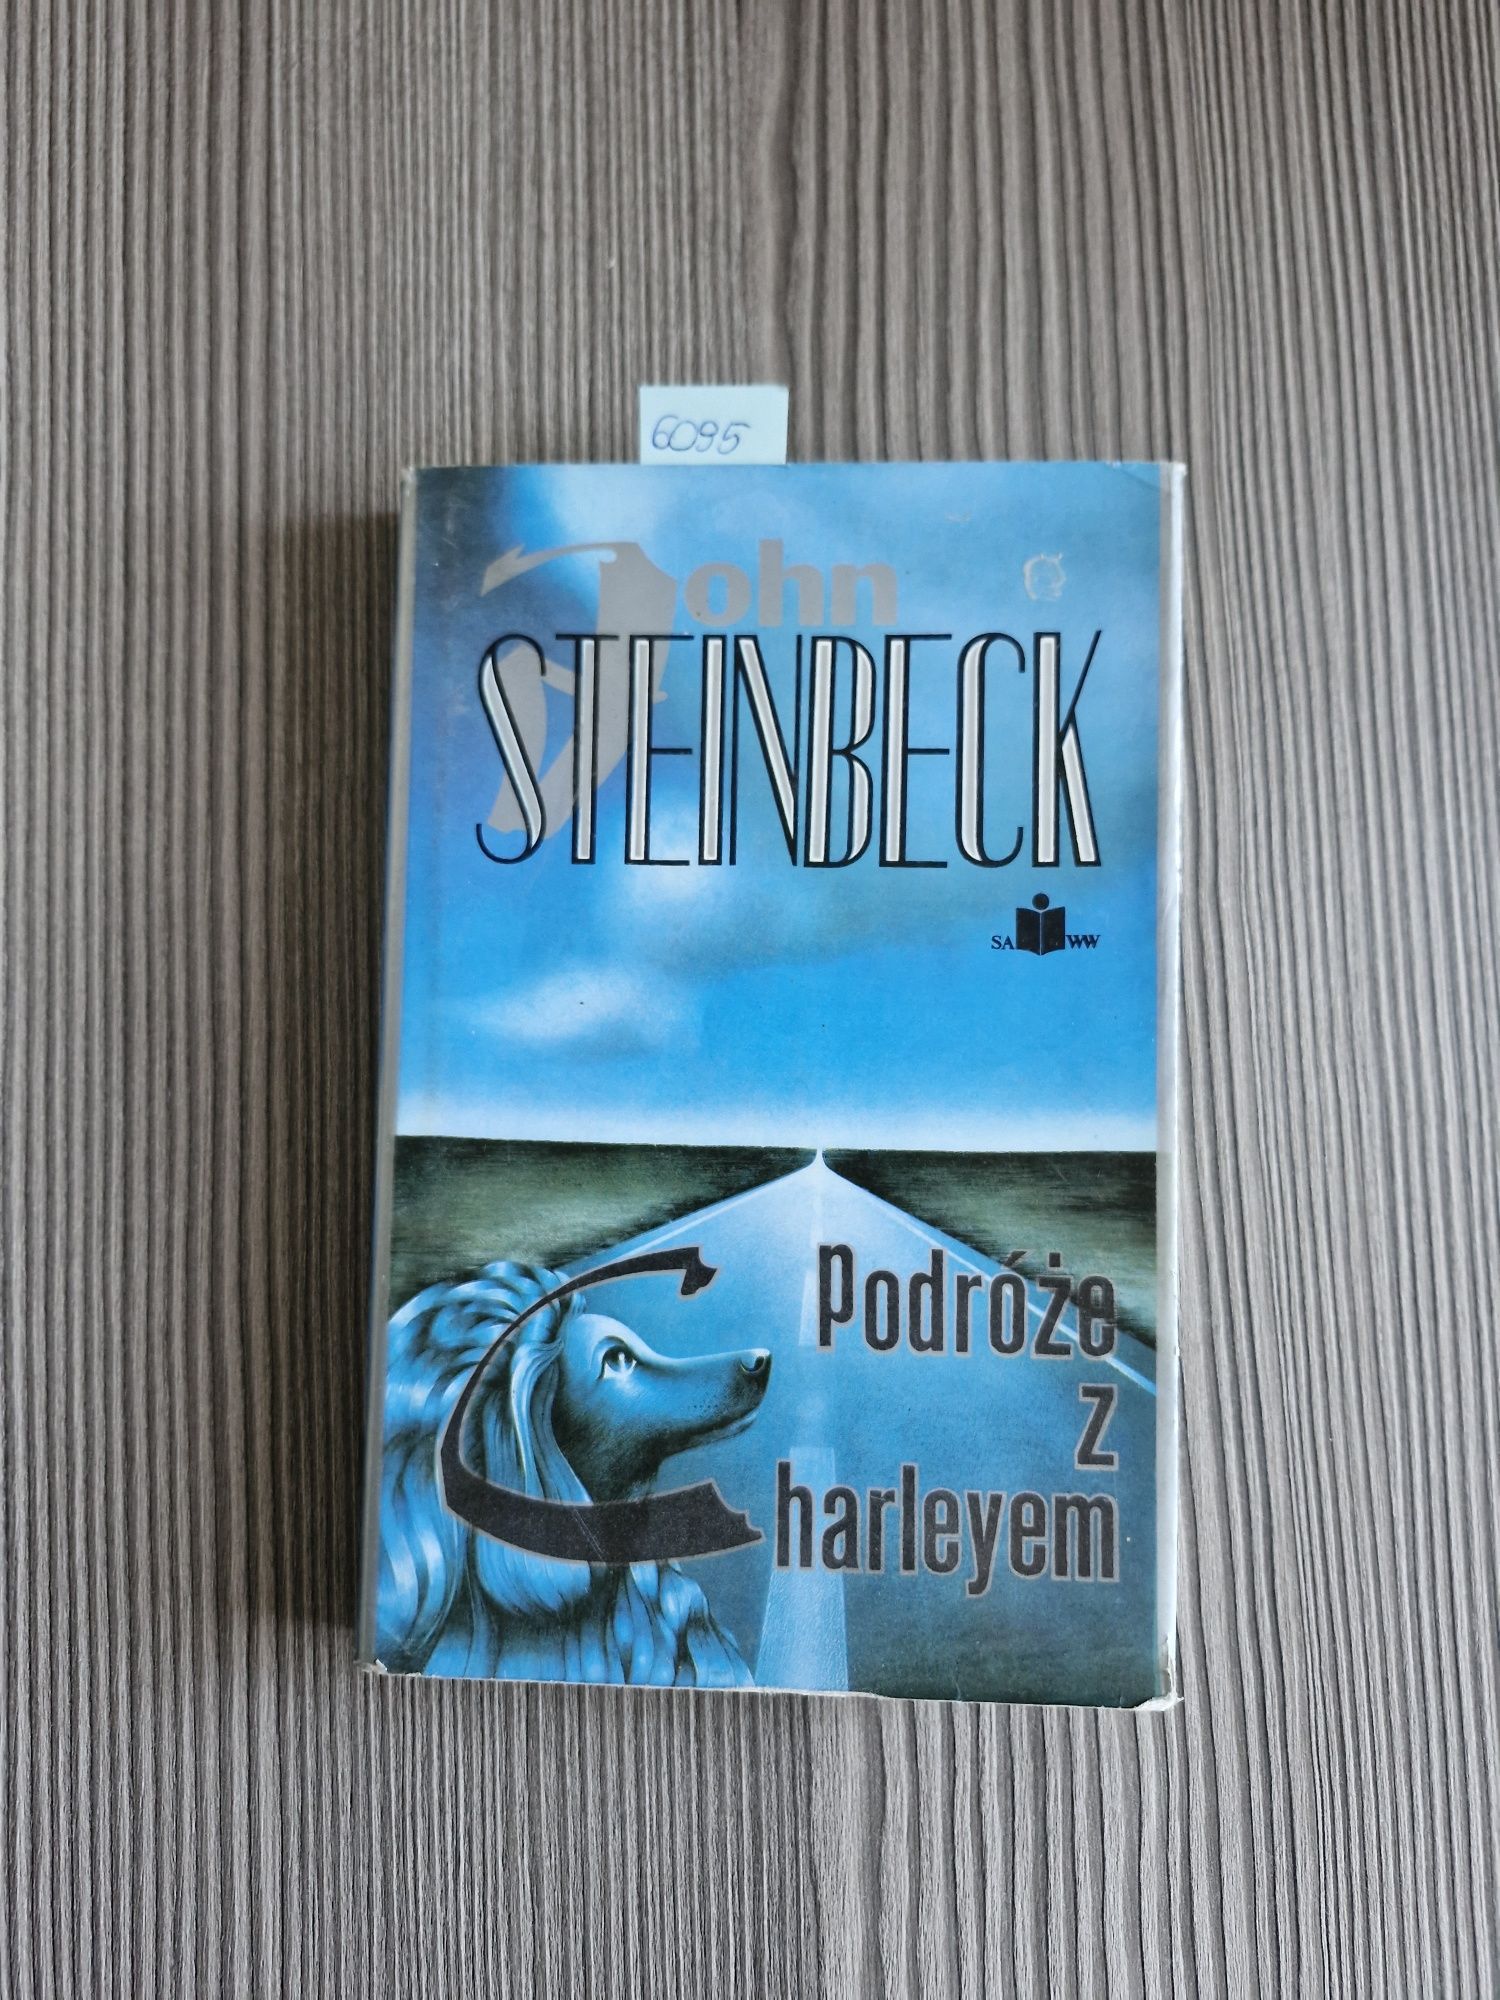 6095. "Podróże z Harleyem" John Steinbeck